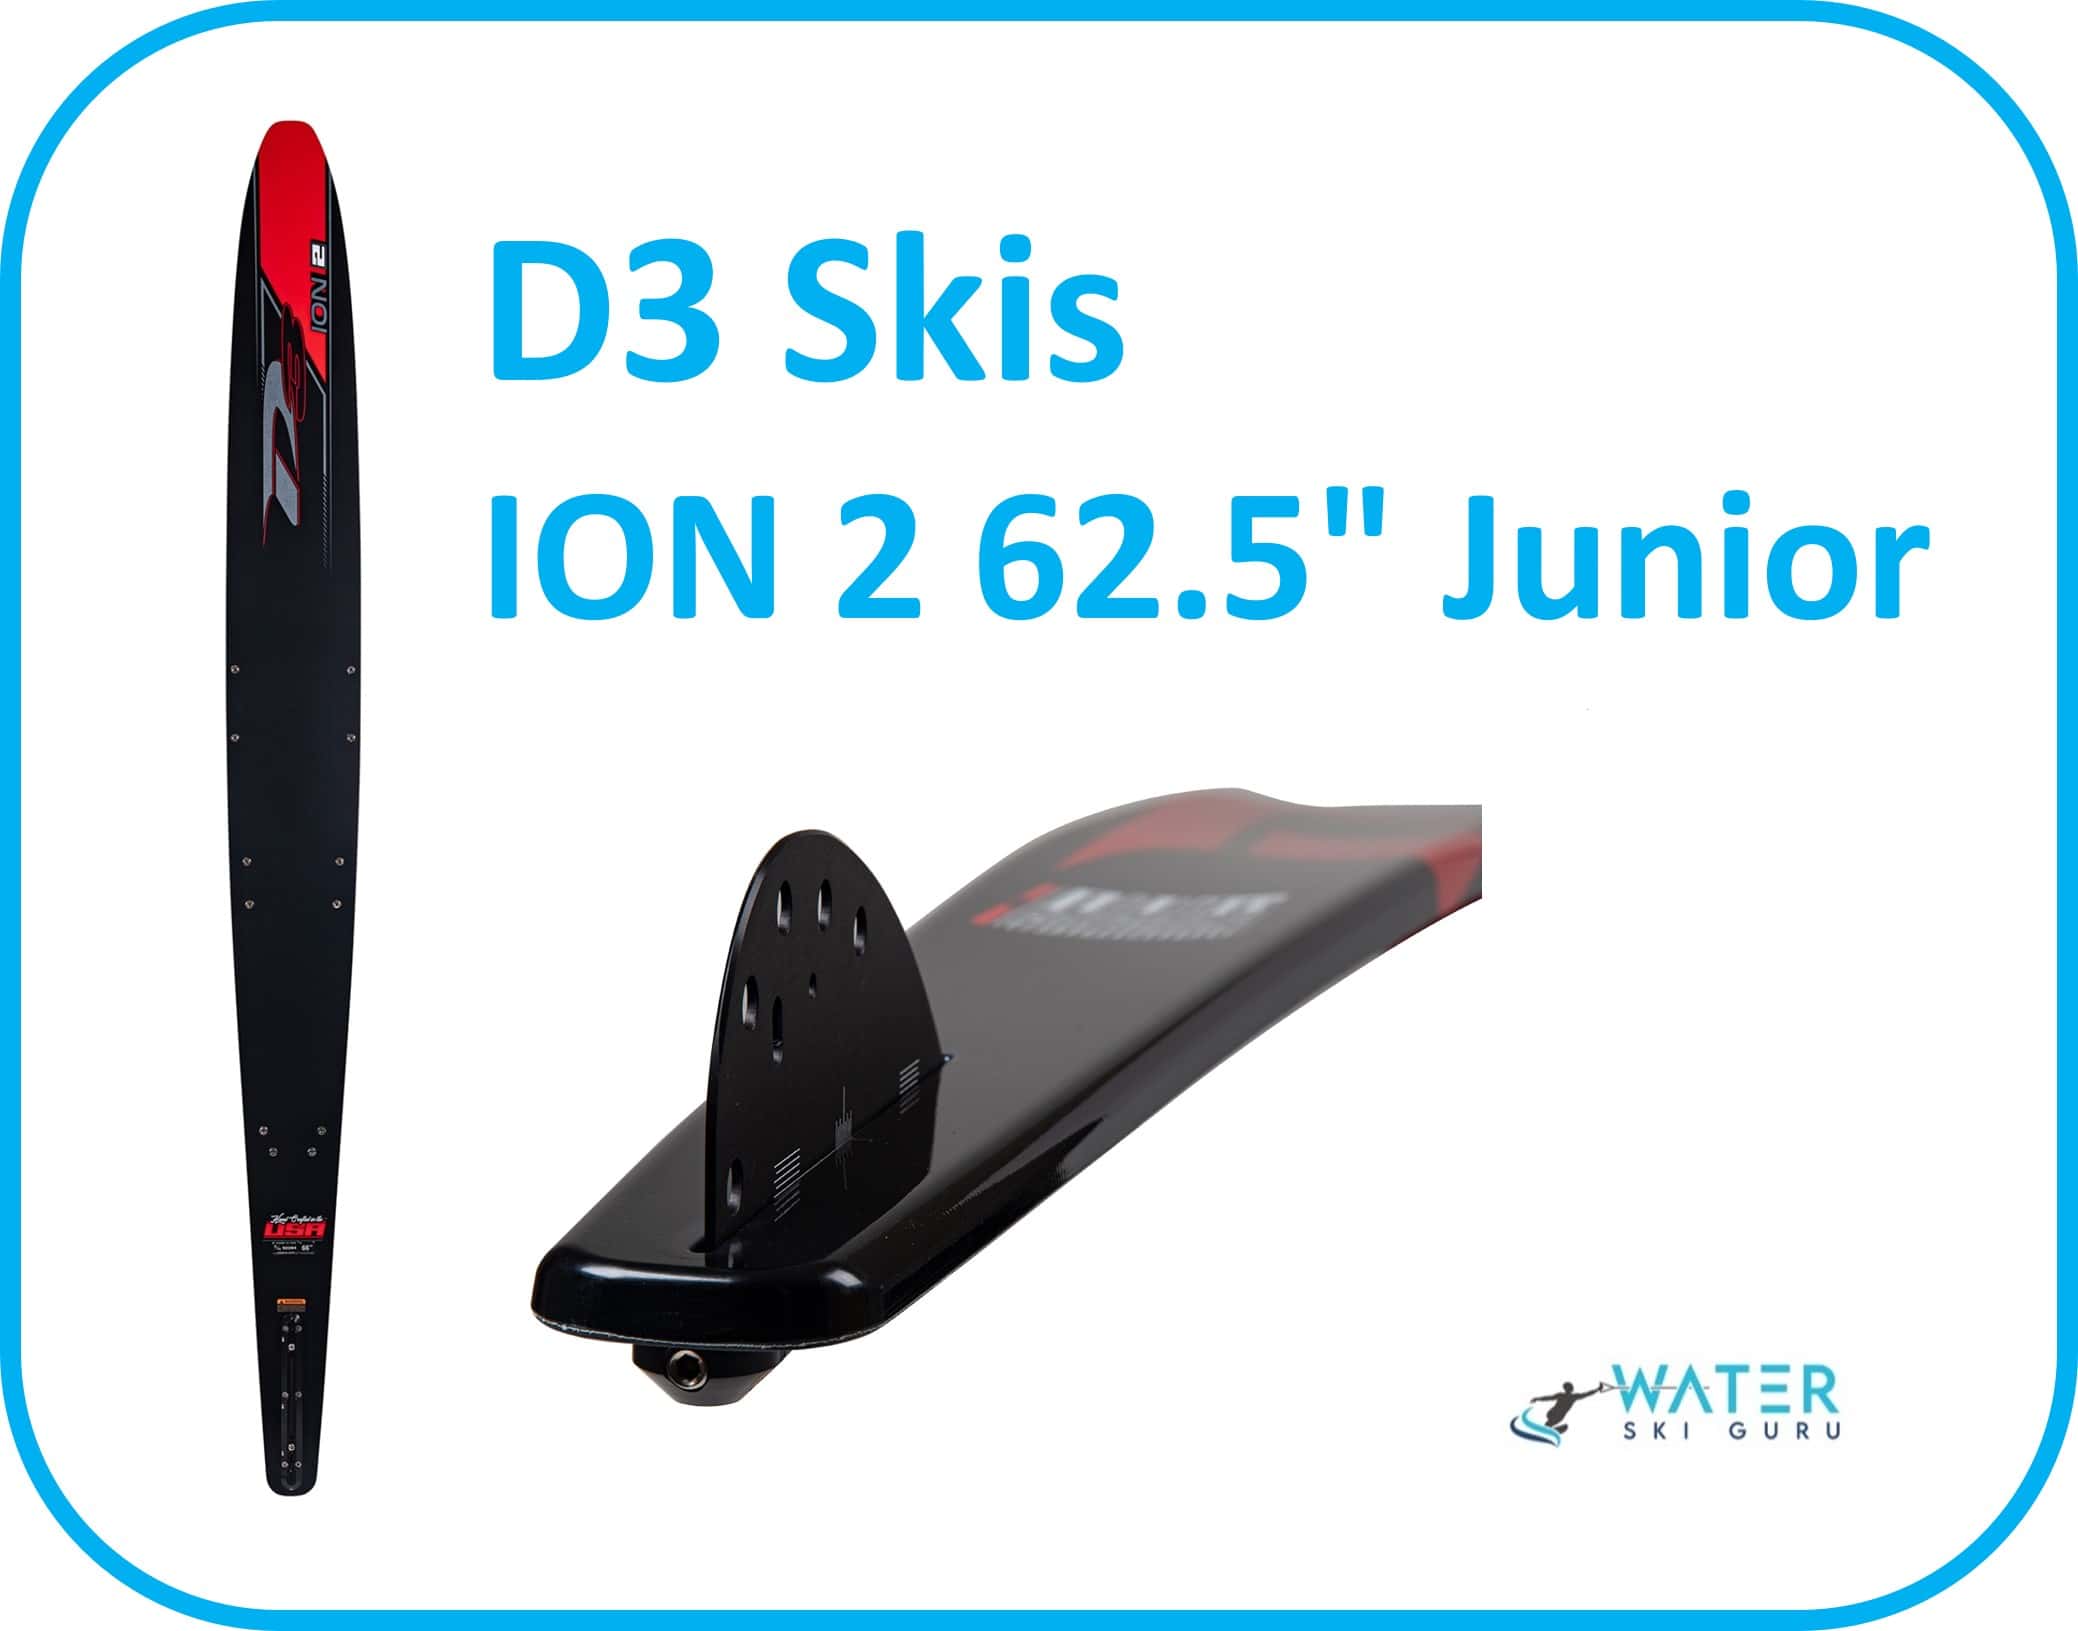 D3 Skis Model ION 2 62.5 Junior